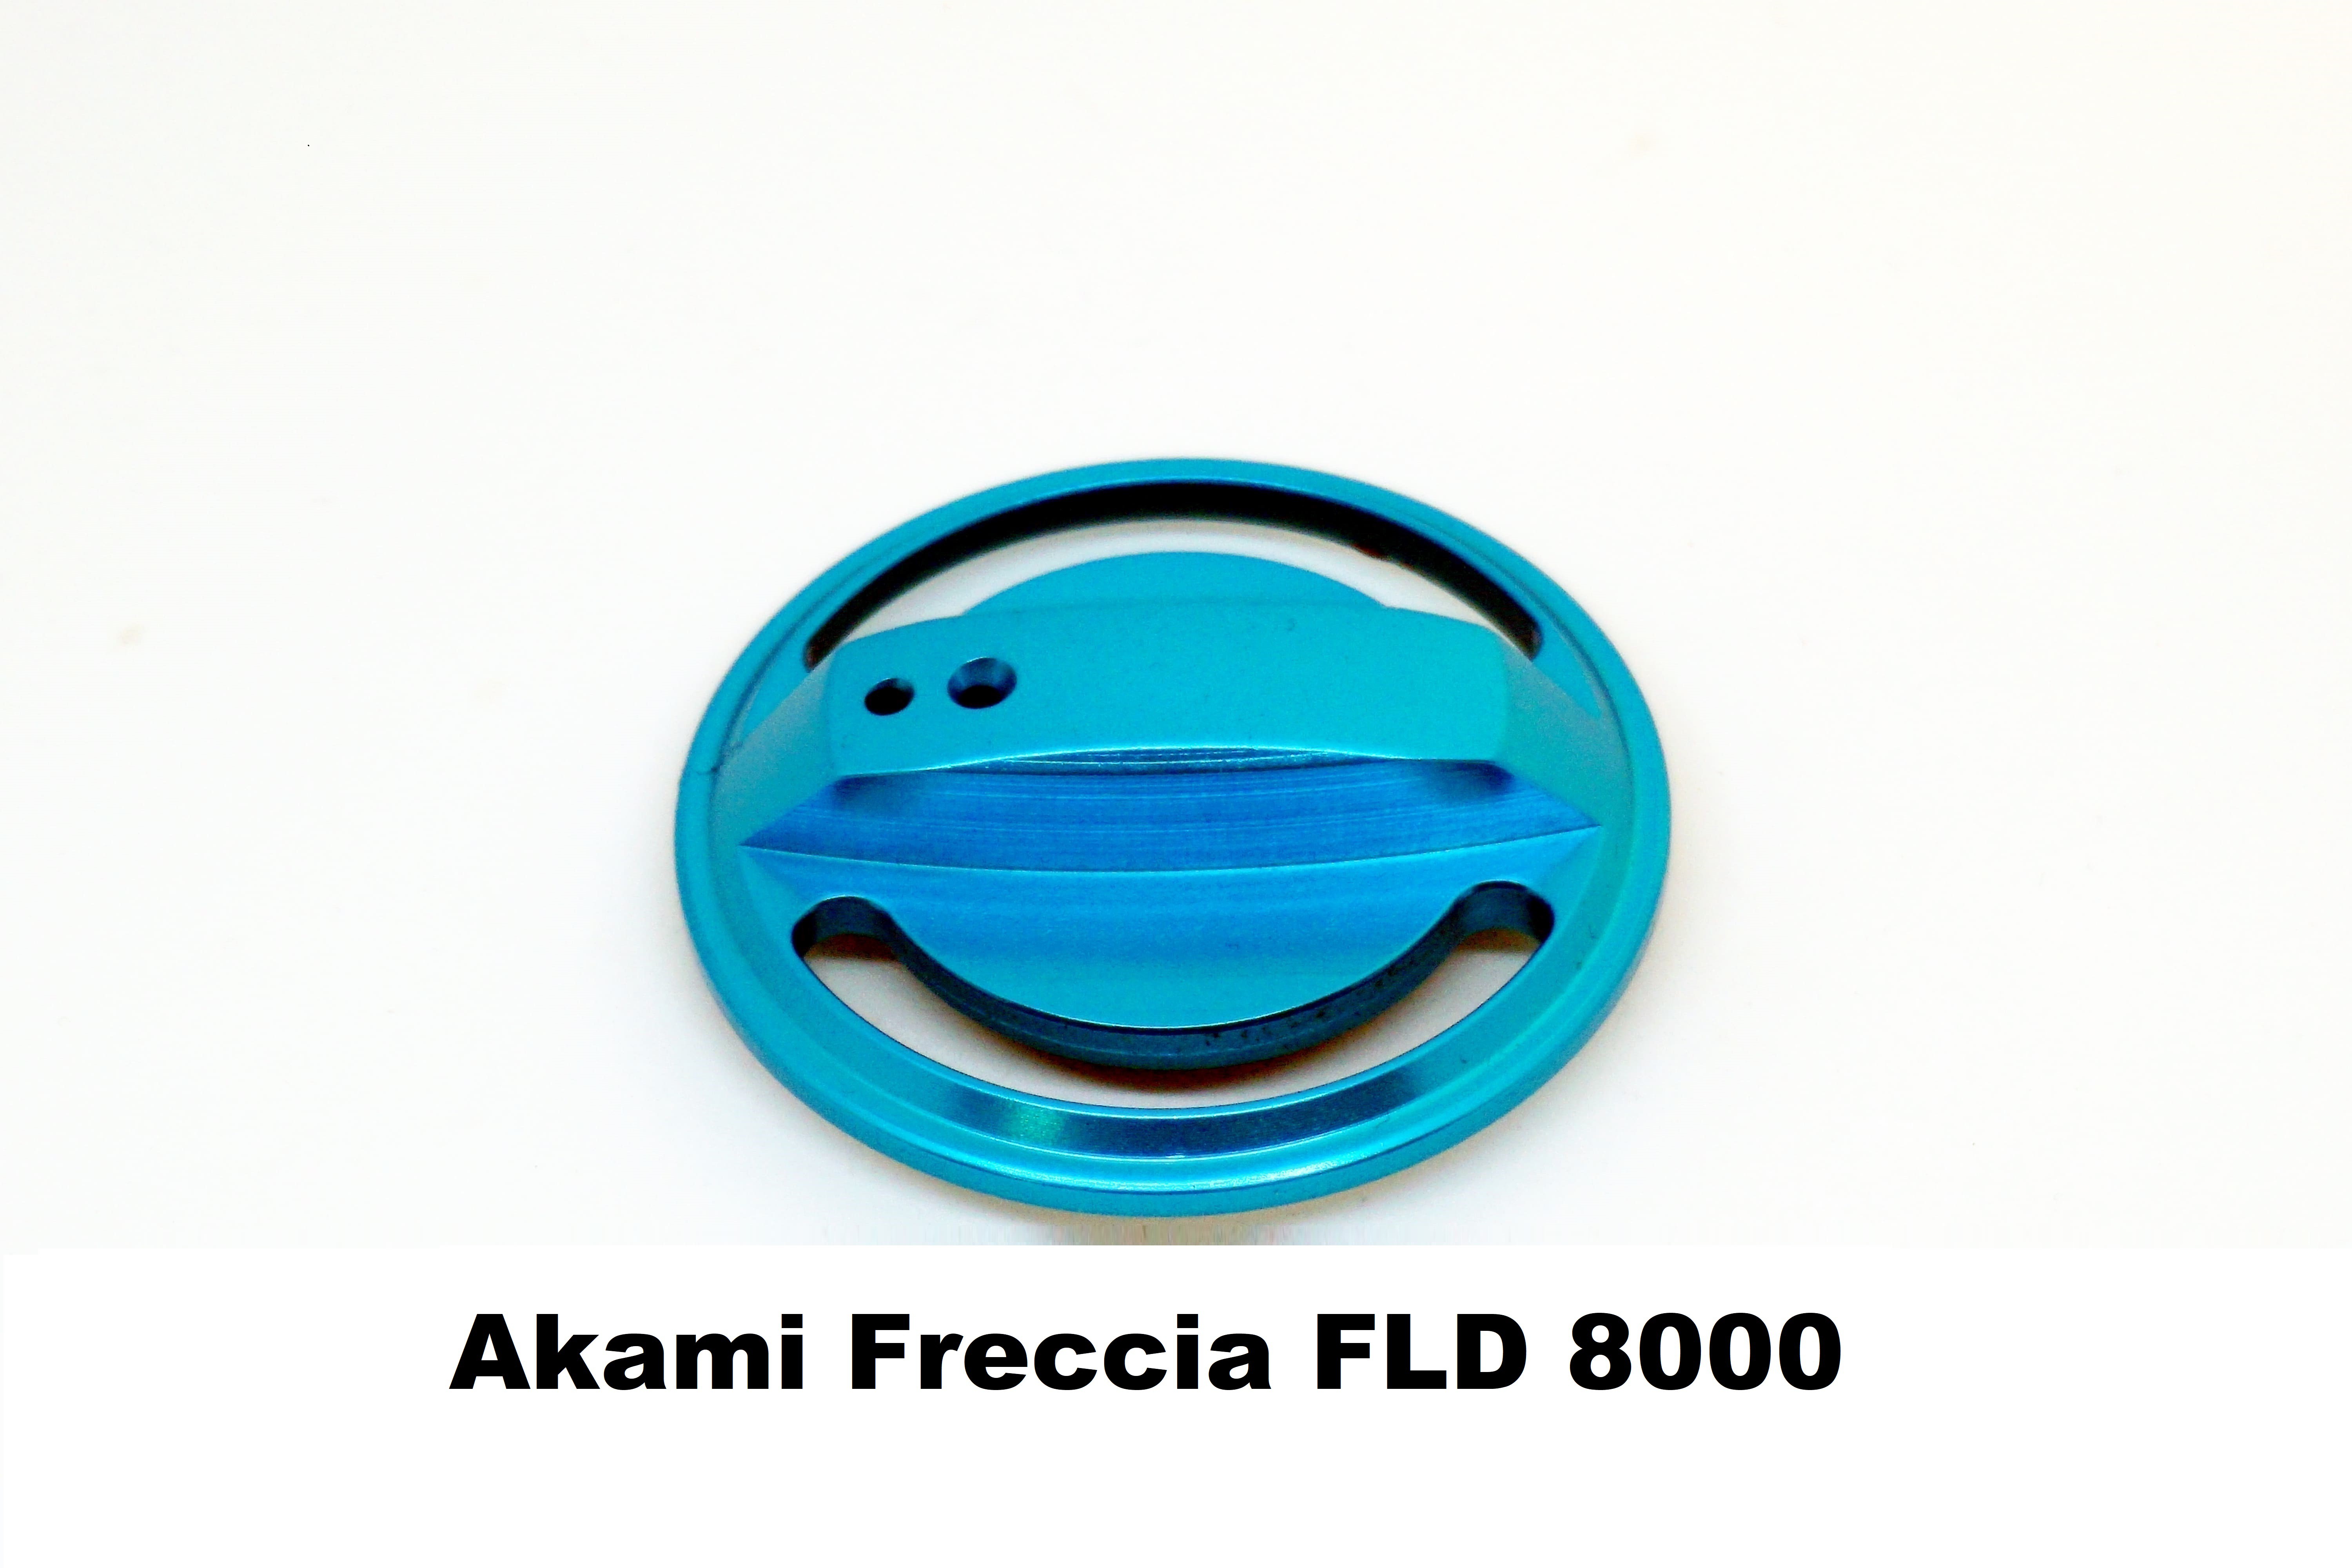 Drag Knob for Akami Freccia FLD 8000